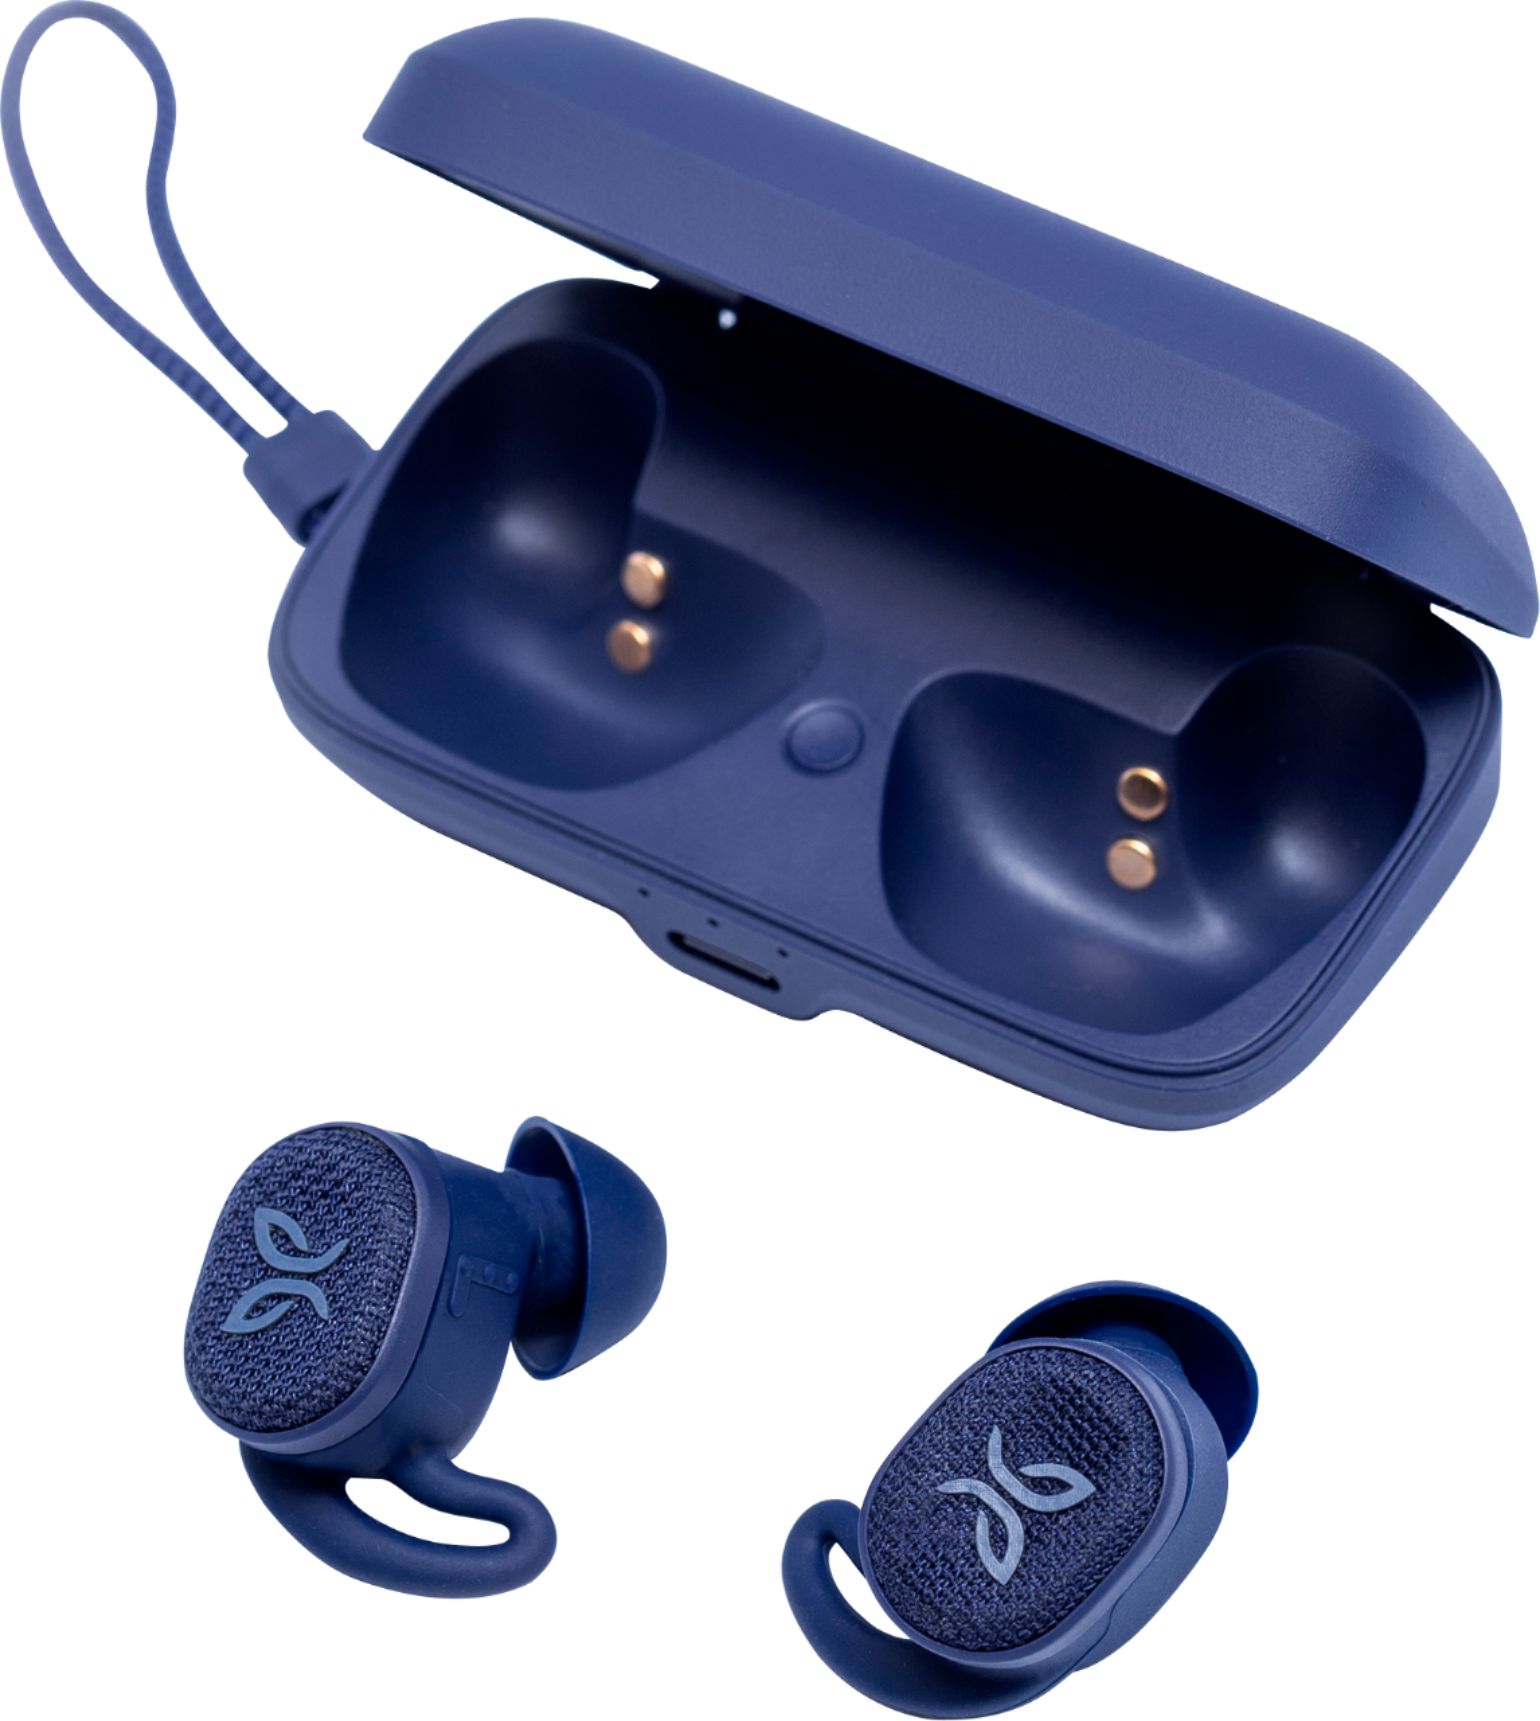 Angle View: Jaybird - Vista 2 True Wireless Noise Cancelling In-Ear Headphones - Midnight Blue